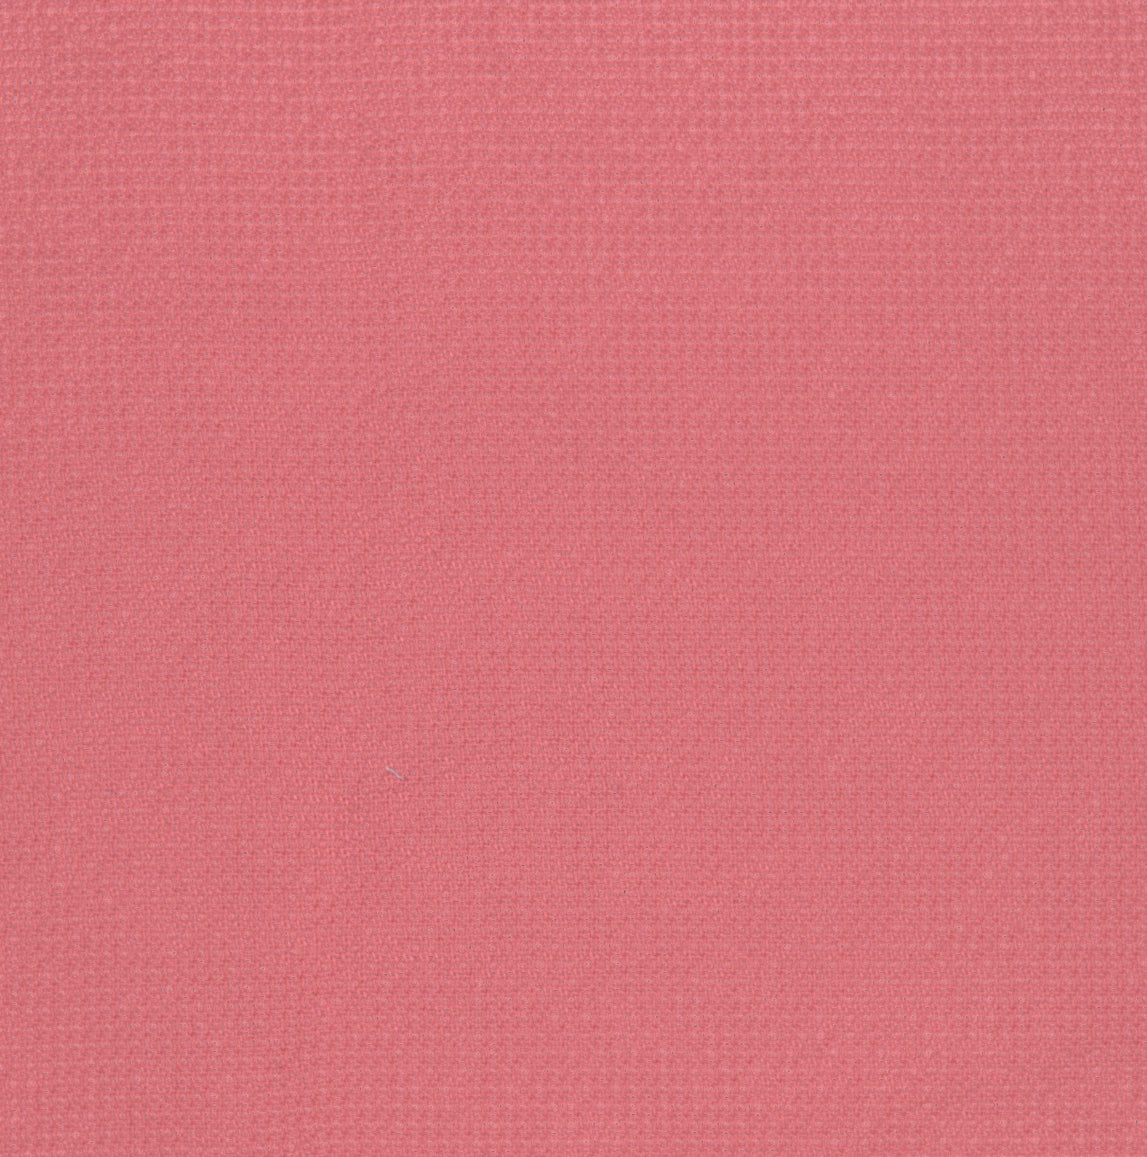 36002-04 Peach Pink Polyester Crepe Plain Dyed 100% 210g/yd 54&quot; pink plain dyed polyester woven Solid Color - knit fabric - woven fabric - fabric company - fabric wholesale - fabric b2b - fabric factory - high quality fabric - hong kong fabric - fabric hk - acetate fabric - cotton fabric - linen fabric - metallic fabric - nylon fabric - polyester fabric - spandex fabric - chun wing hing - cwh hk - fabric worldwide ship - 針織布 - 梳織布 - 布料公司- 布料批發 - 香港布料 - 秦榮興